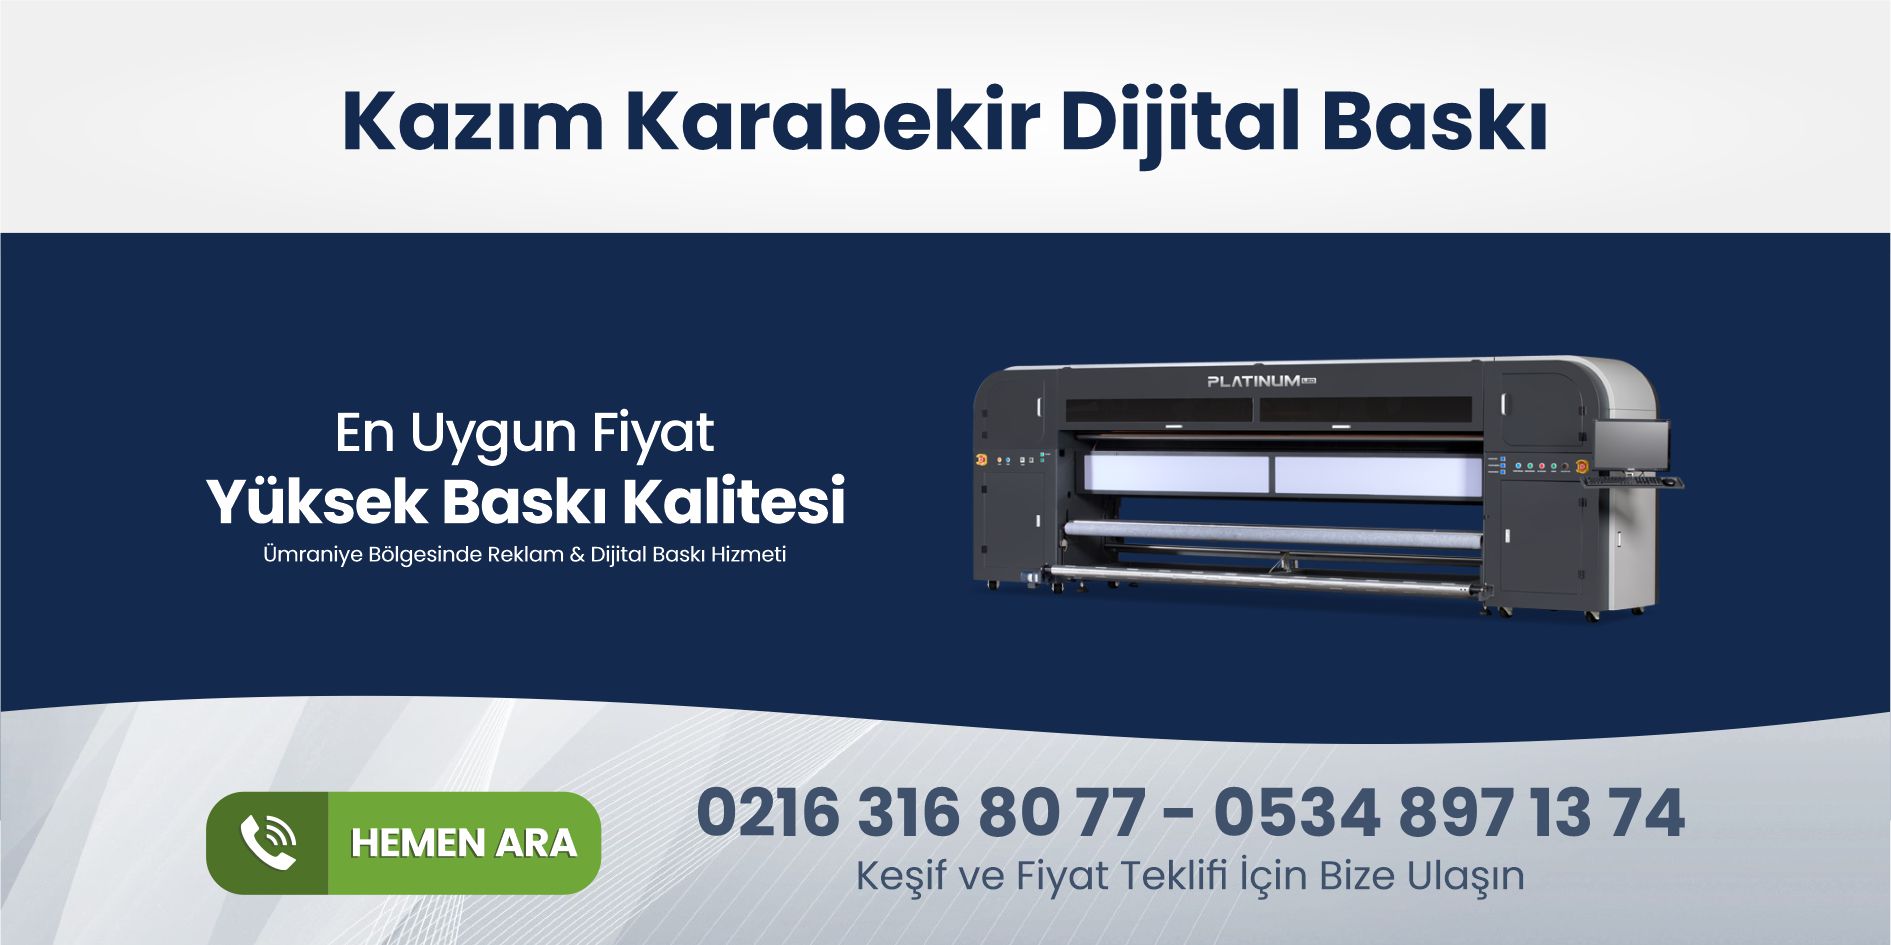 You are currently viewing Kazım Karabekir Dijital Baskı